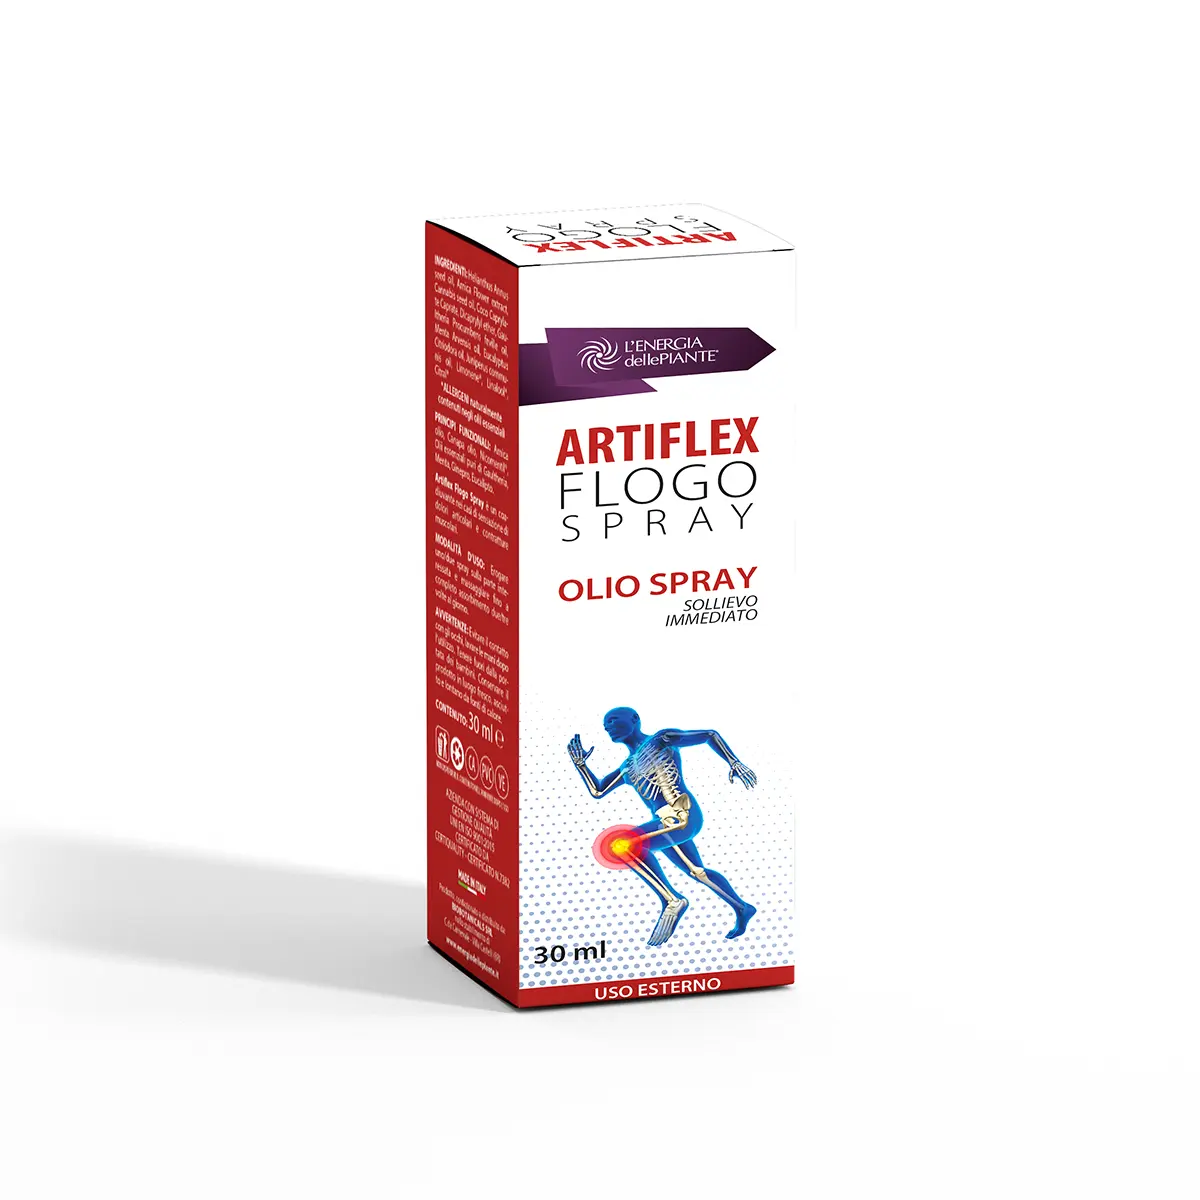 ARTIFLEX FLOGO SPRAY Arnica Oil Arthritis Joint Pain Relief Muscle Inflammation Spray Reduces Bruises 30 ml bottle